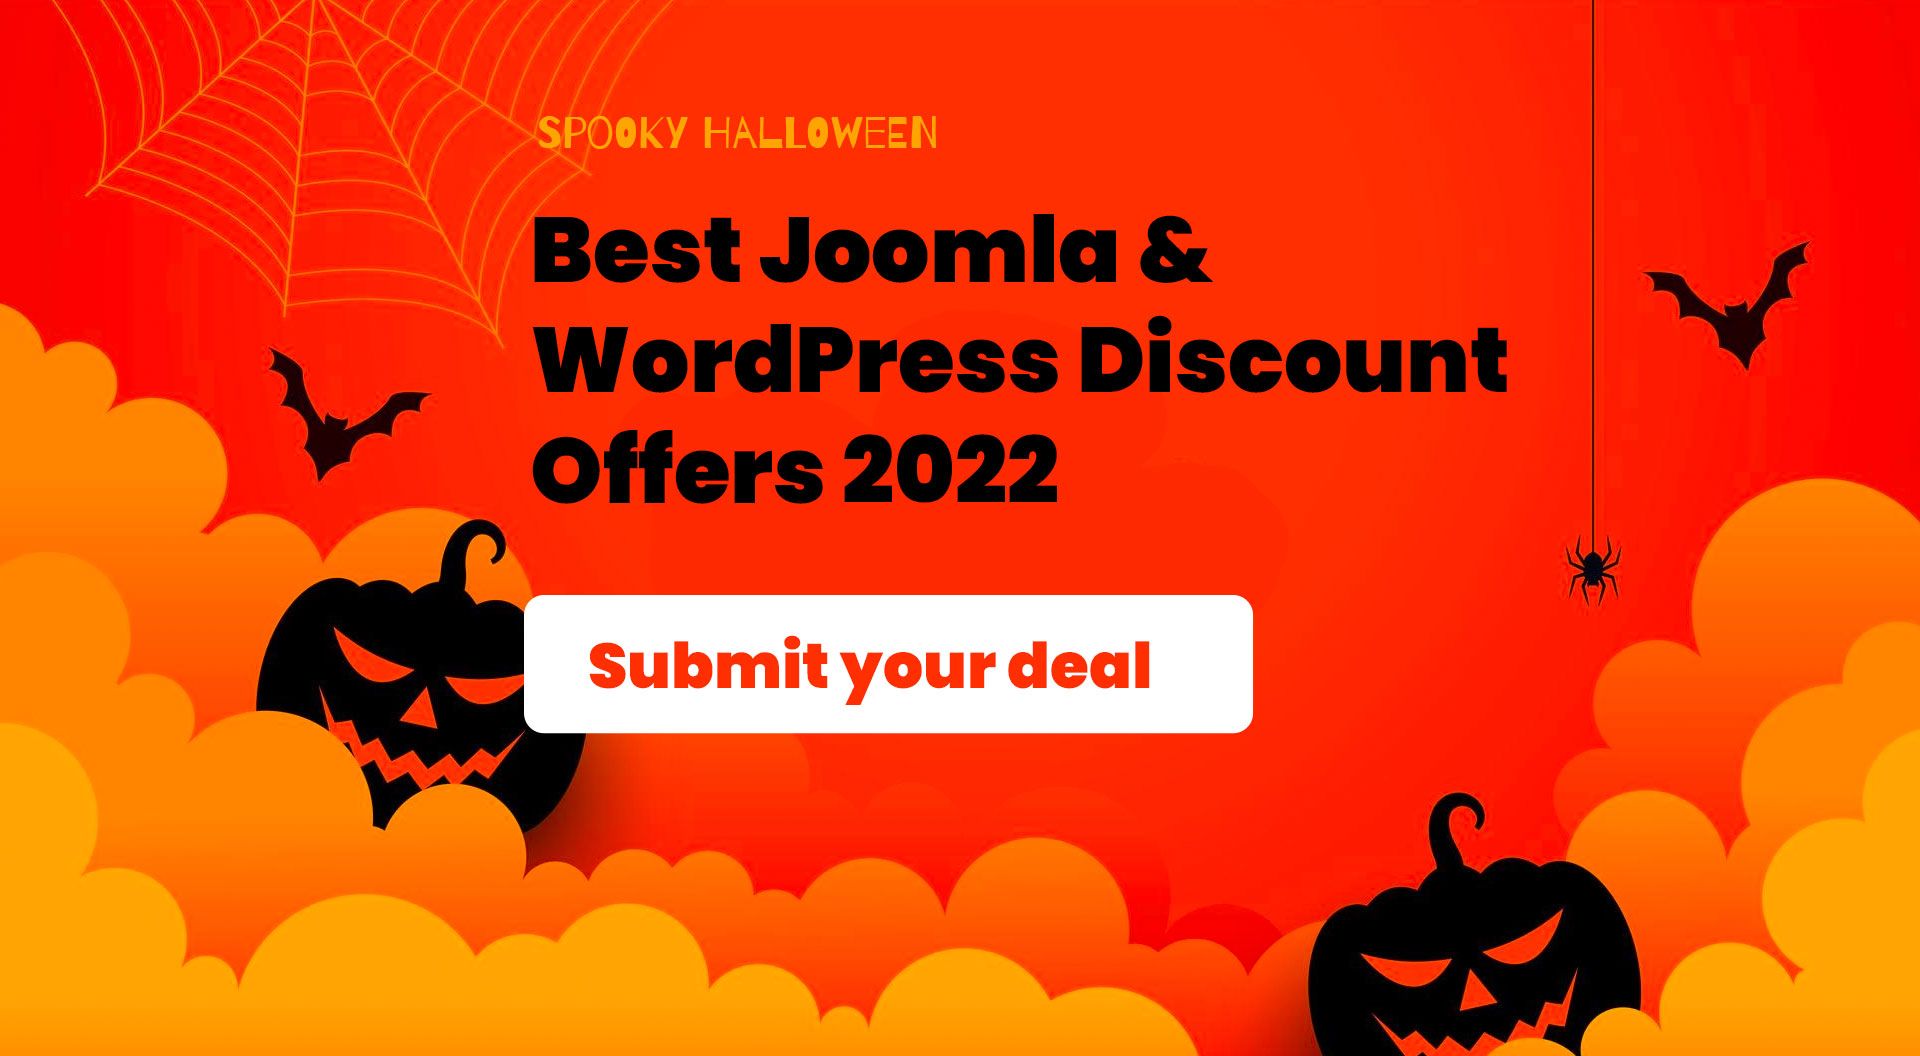 Halloween Joomla and WordPress Deals 2022 - SUBMIT YOUR DEAL!